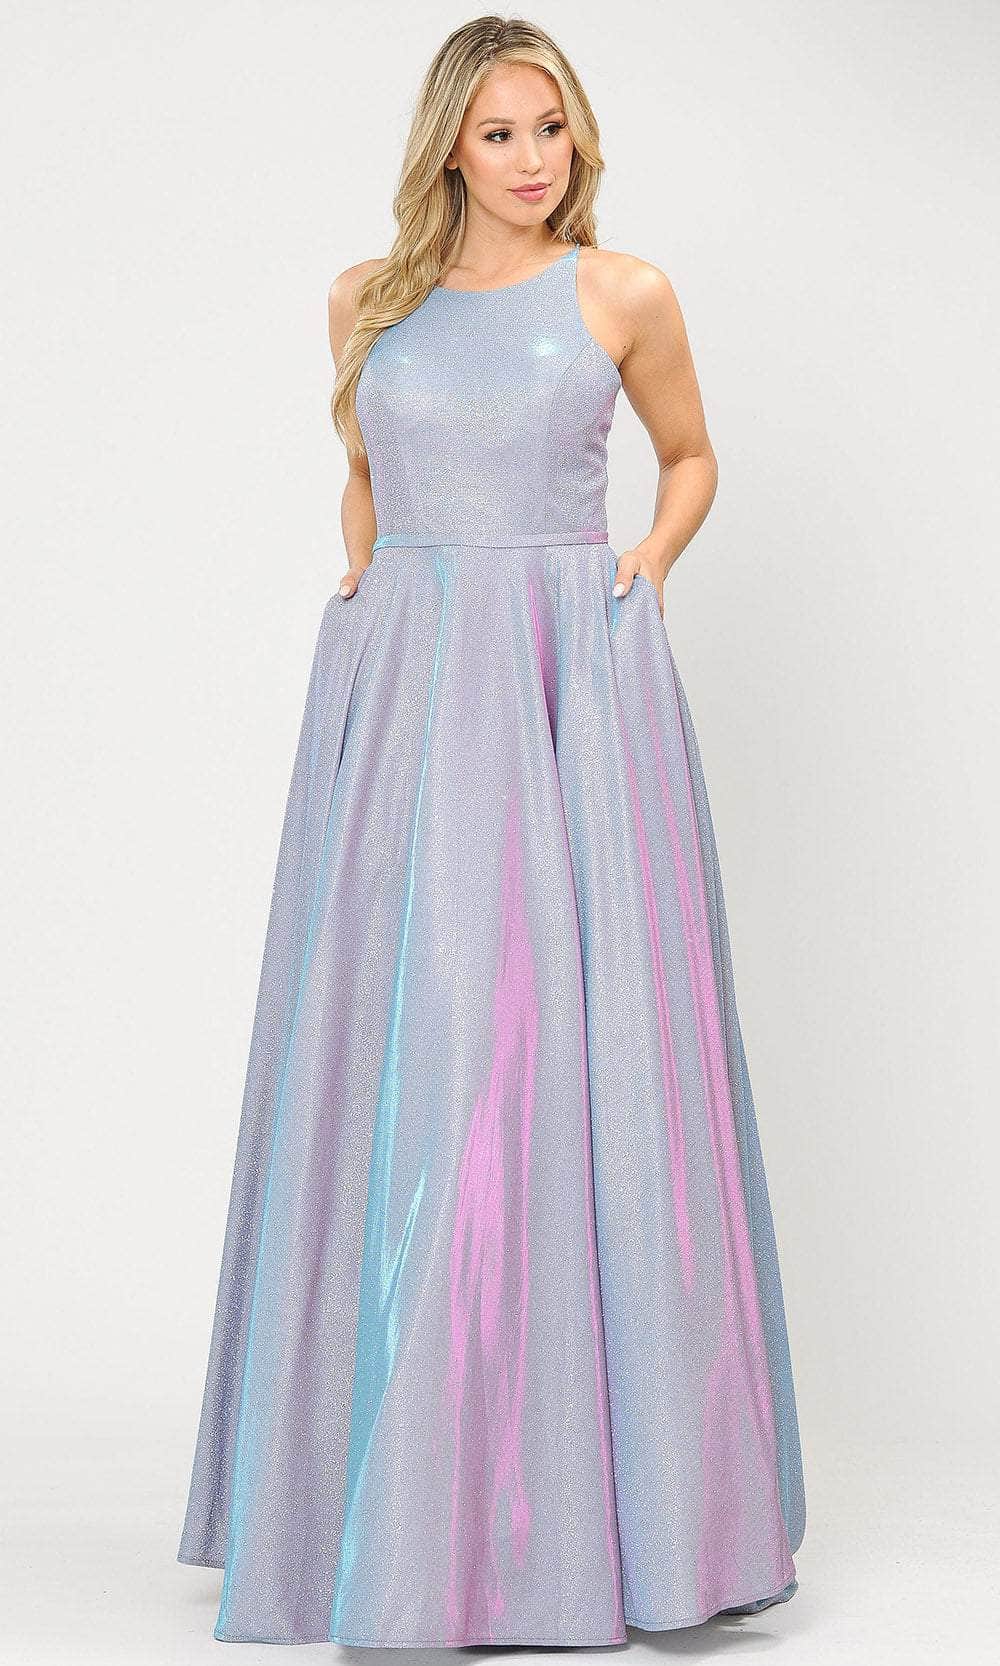 Image of Poly USA 8436 - Sleeveless A-Line Glitter Dress